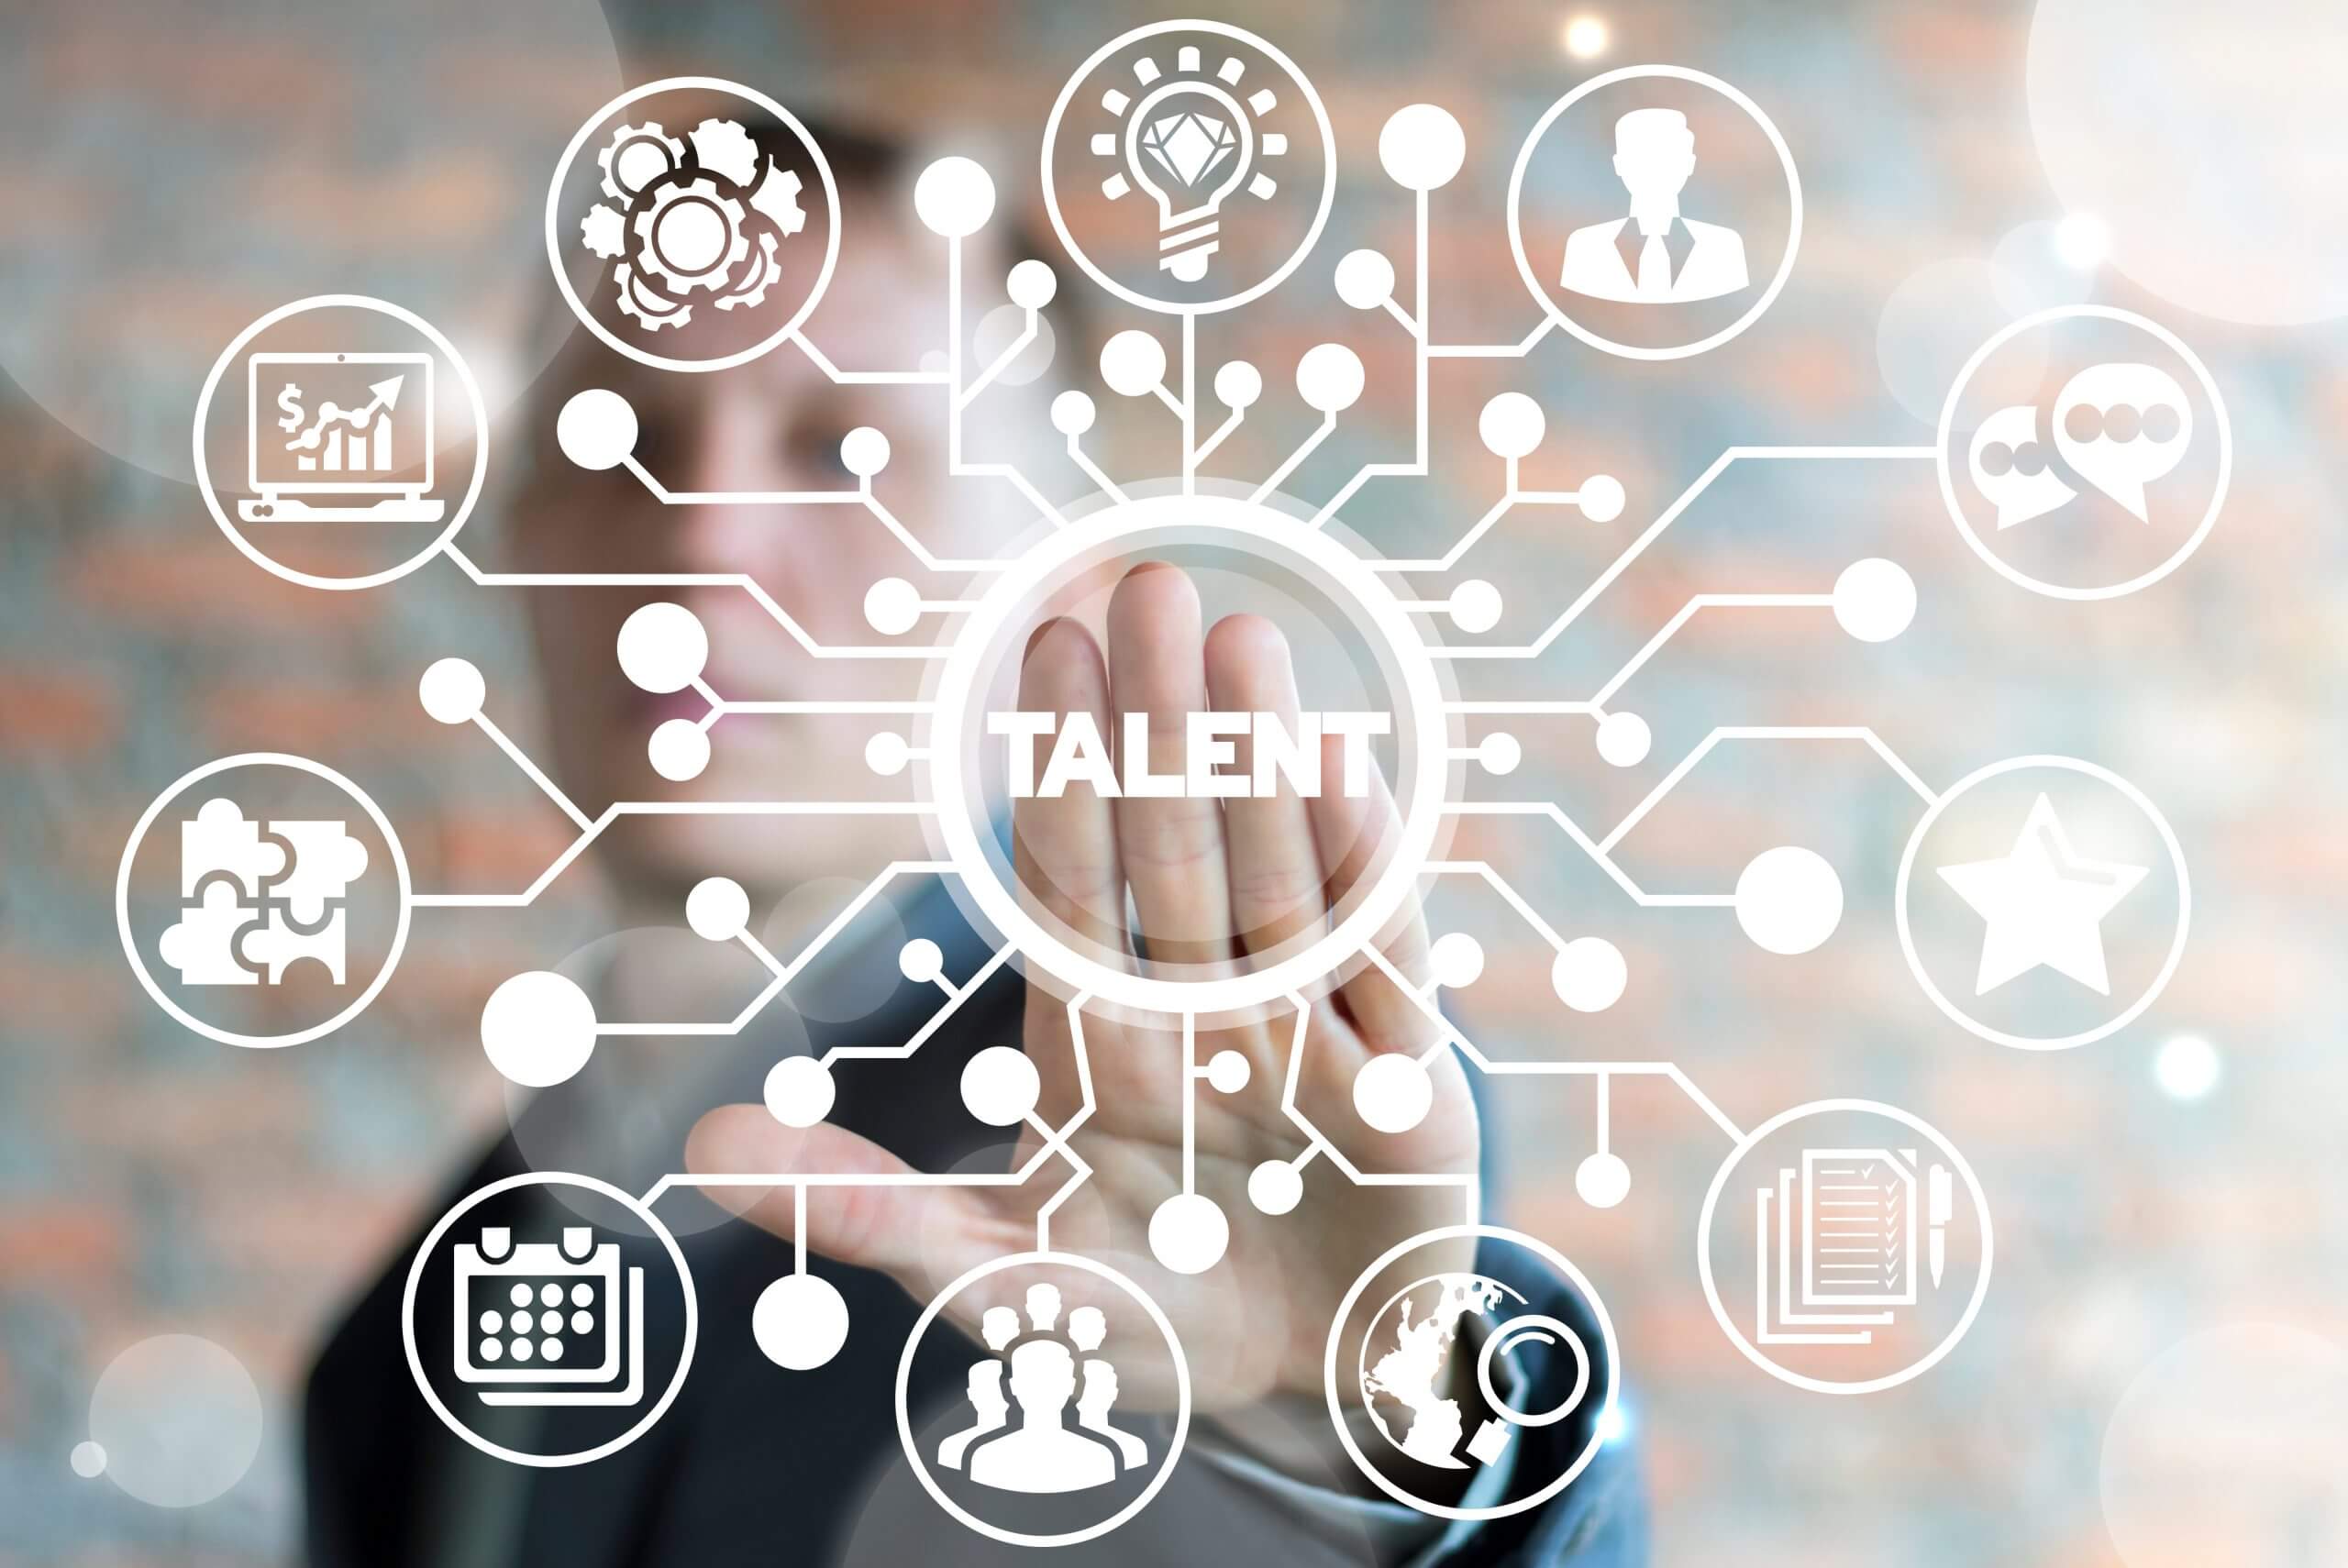 Talent as a Service, Vigilant Technologies